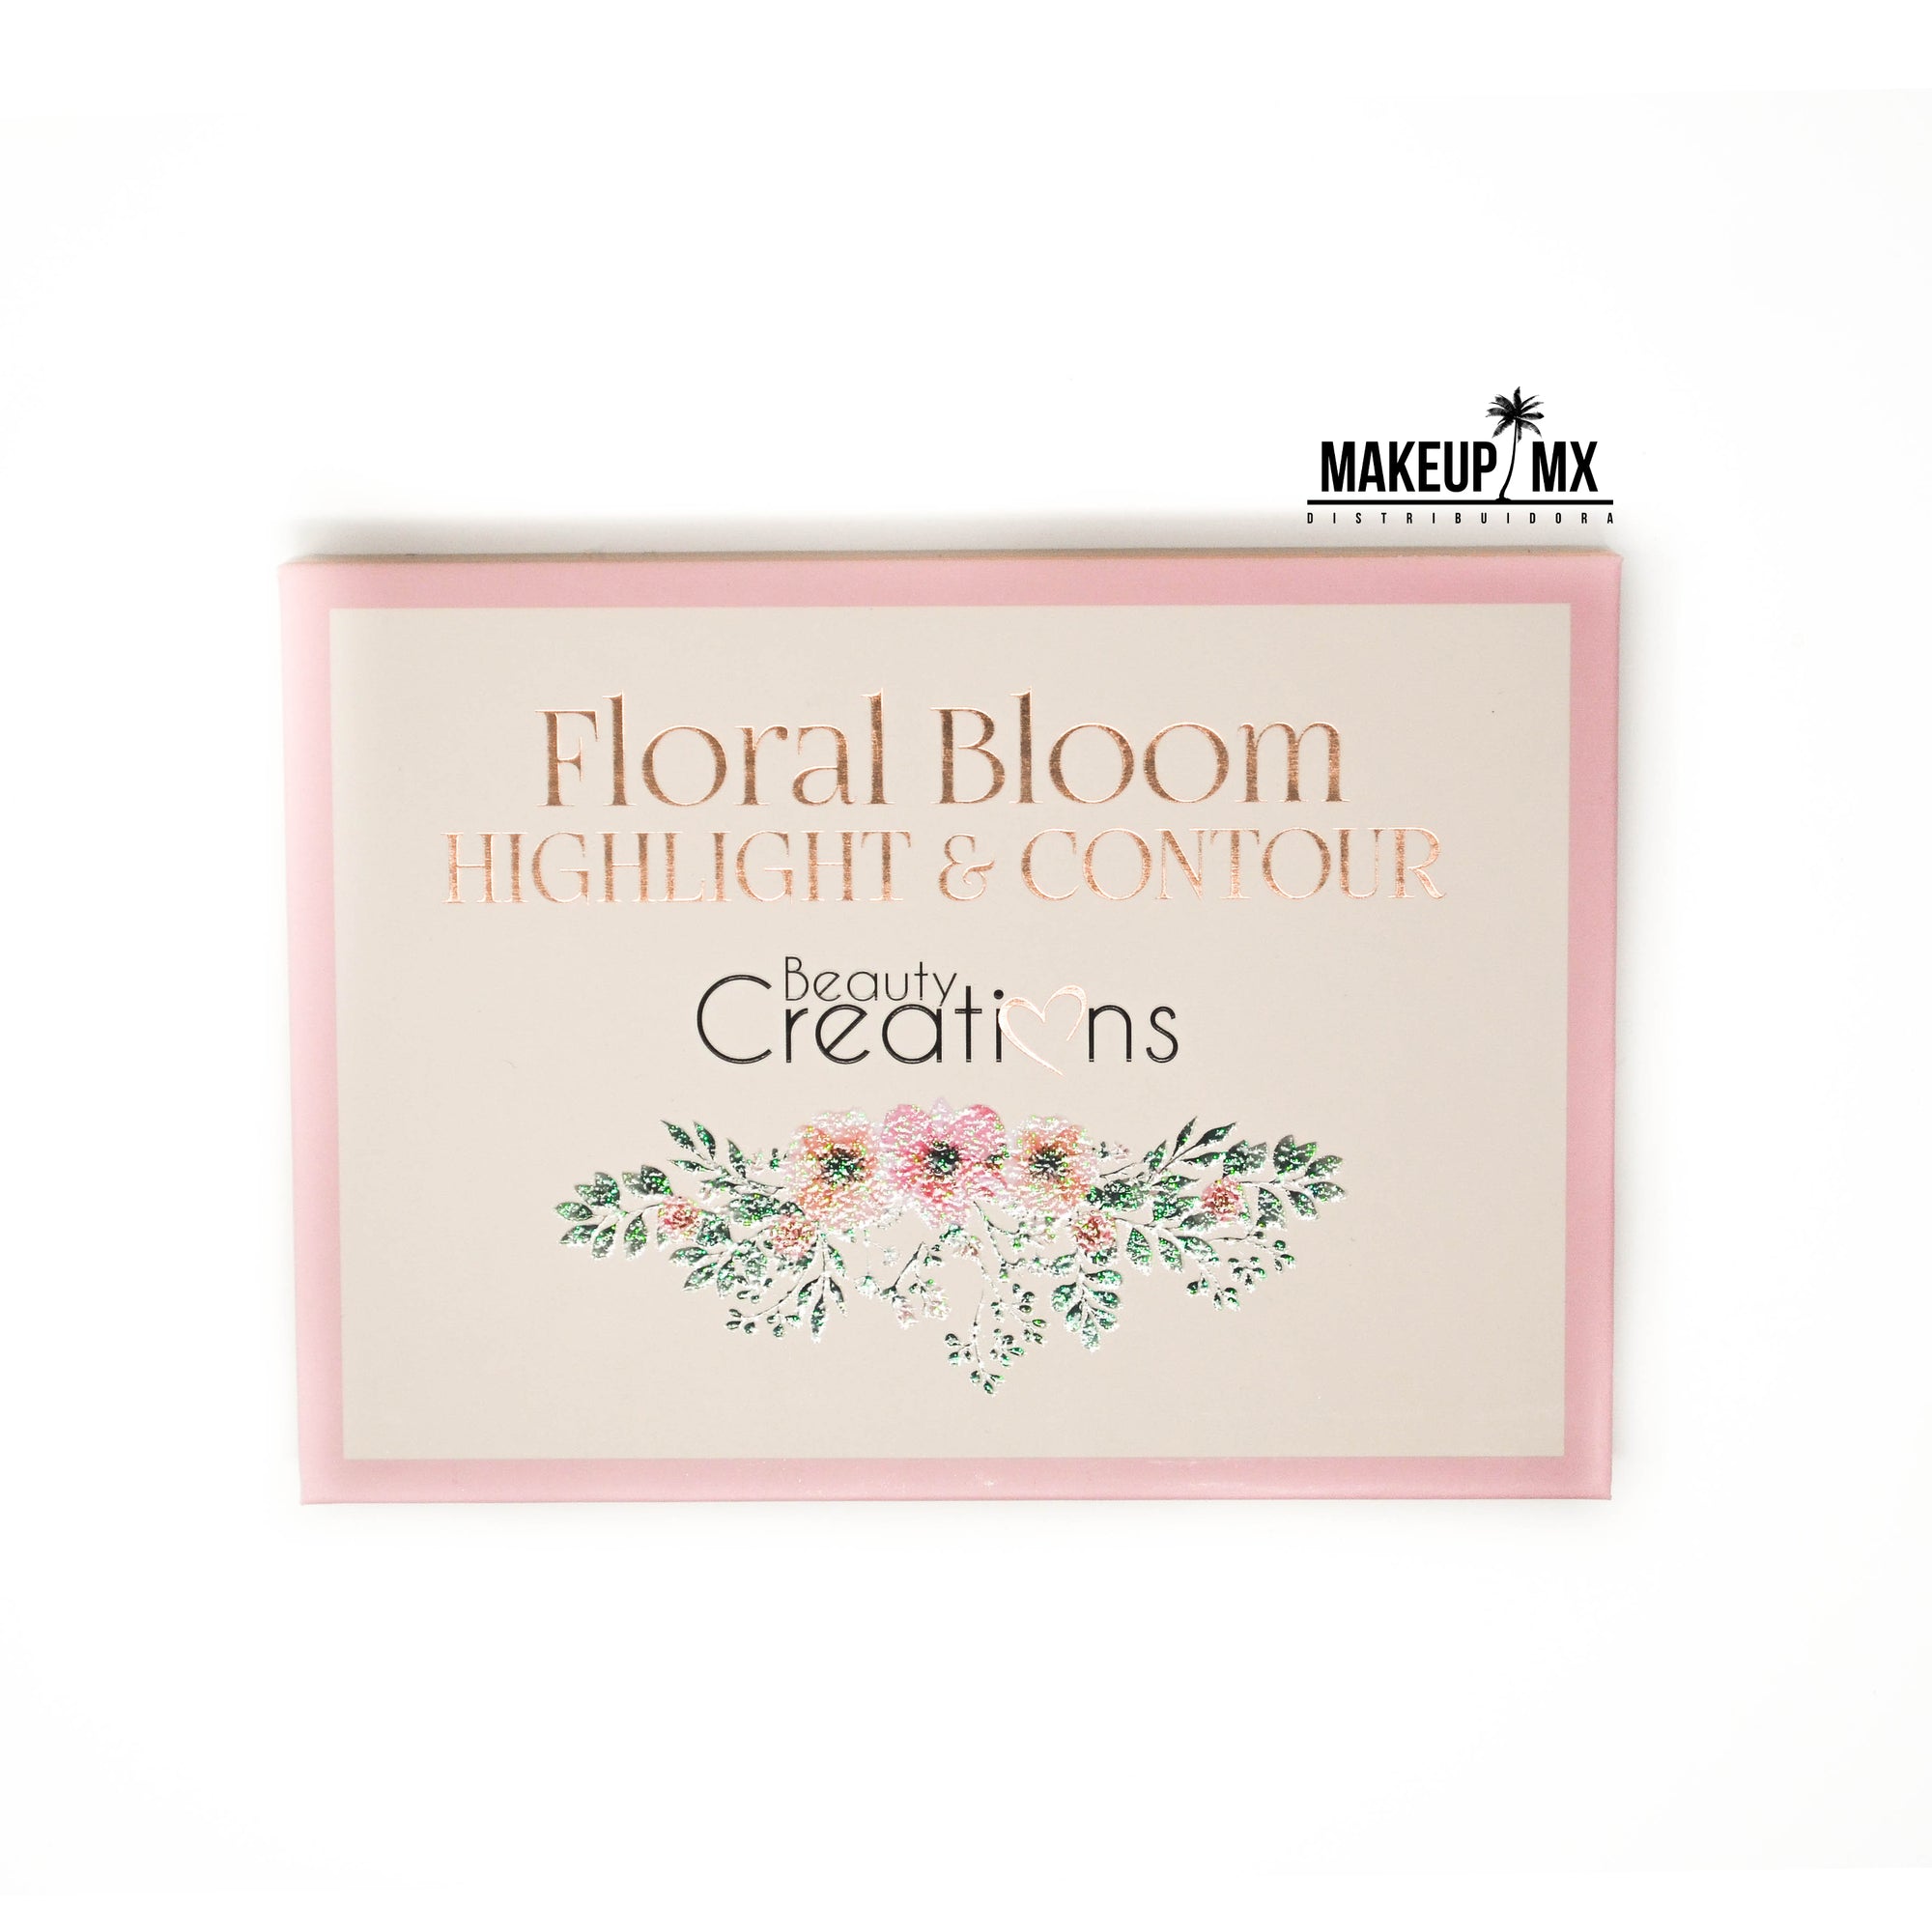 Floral Bloom Highlight & Contour Palette